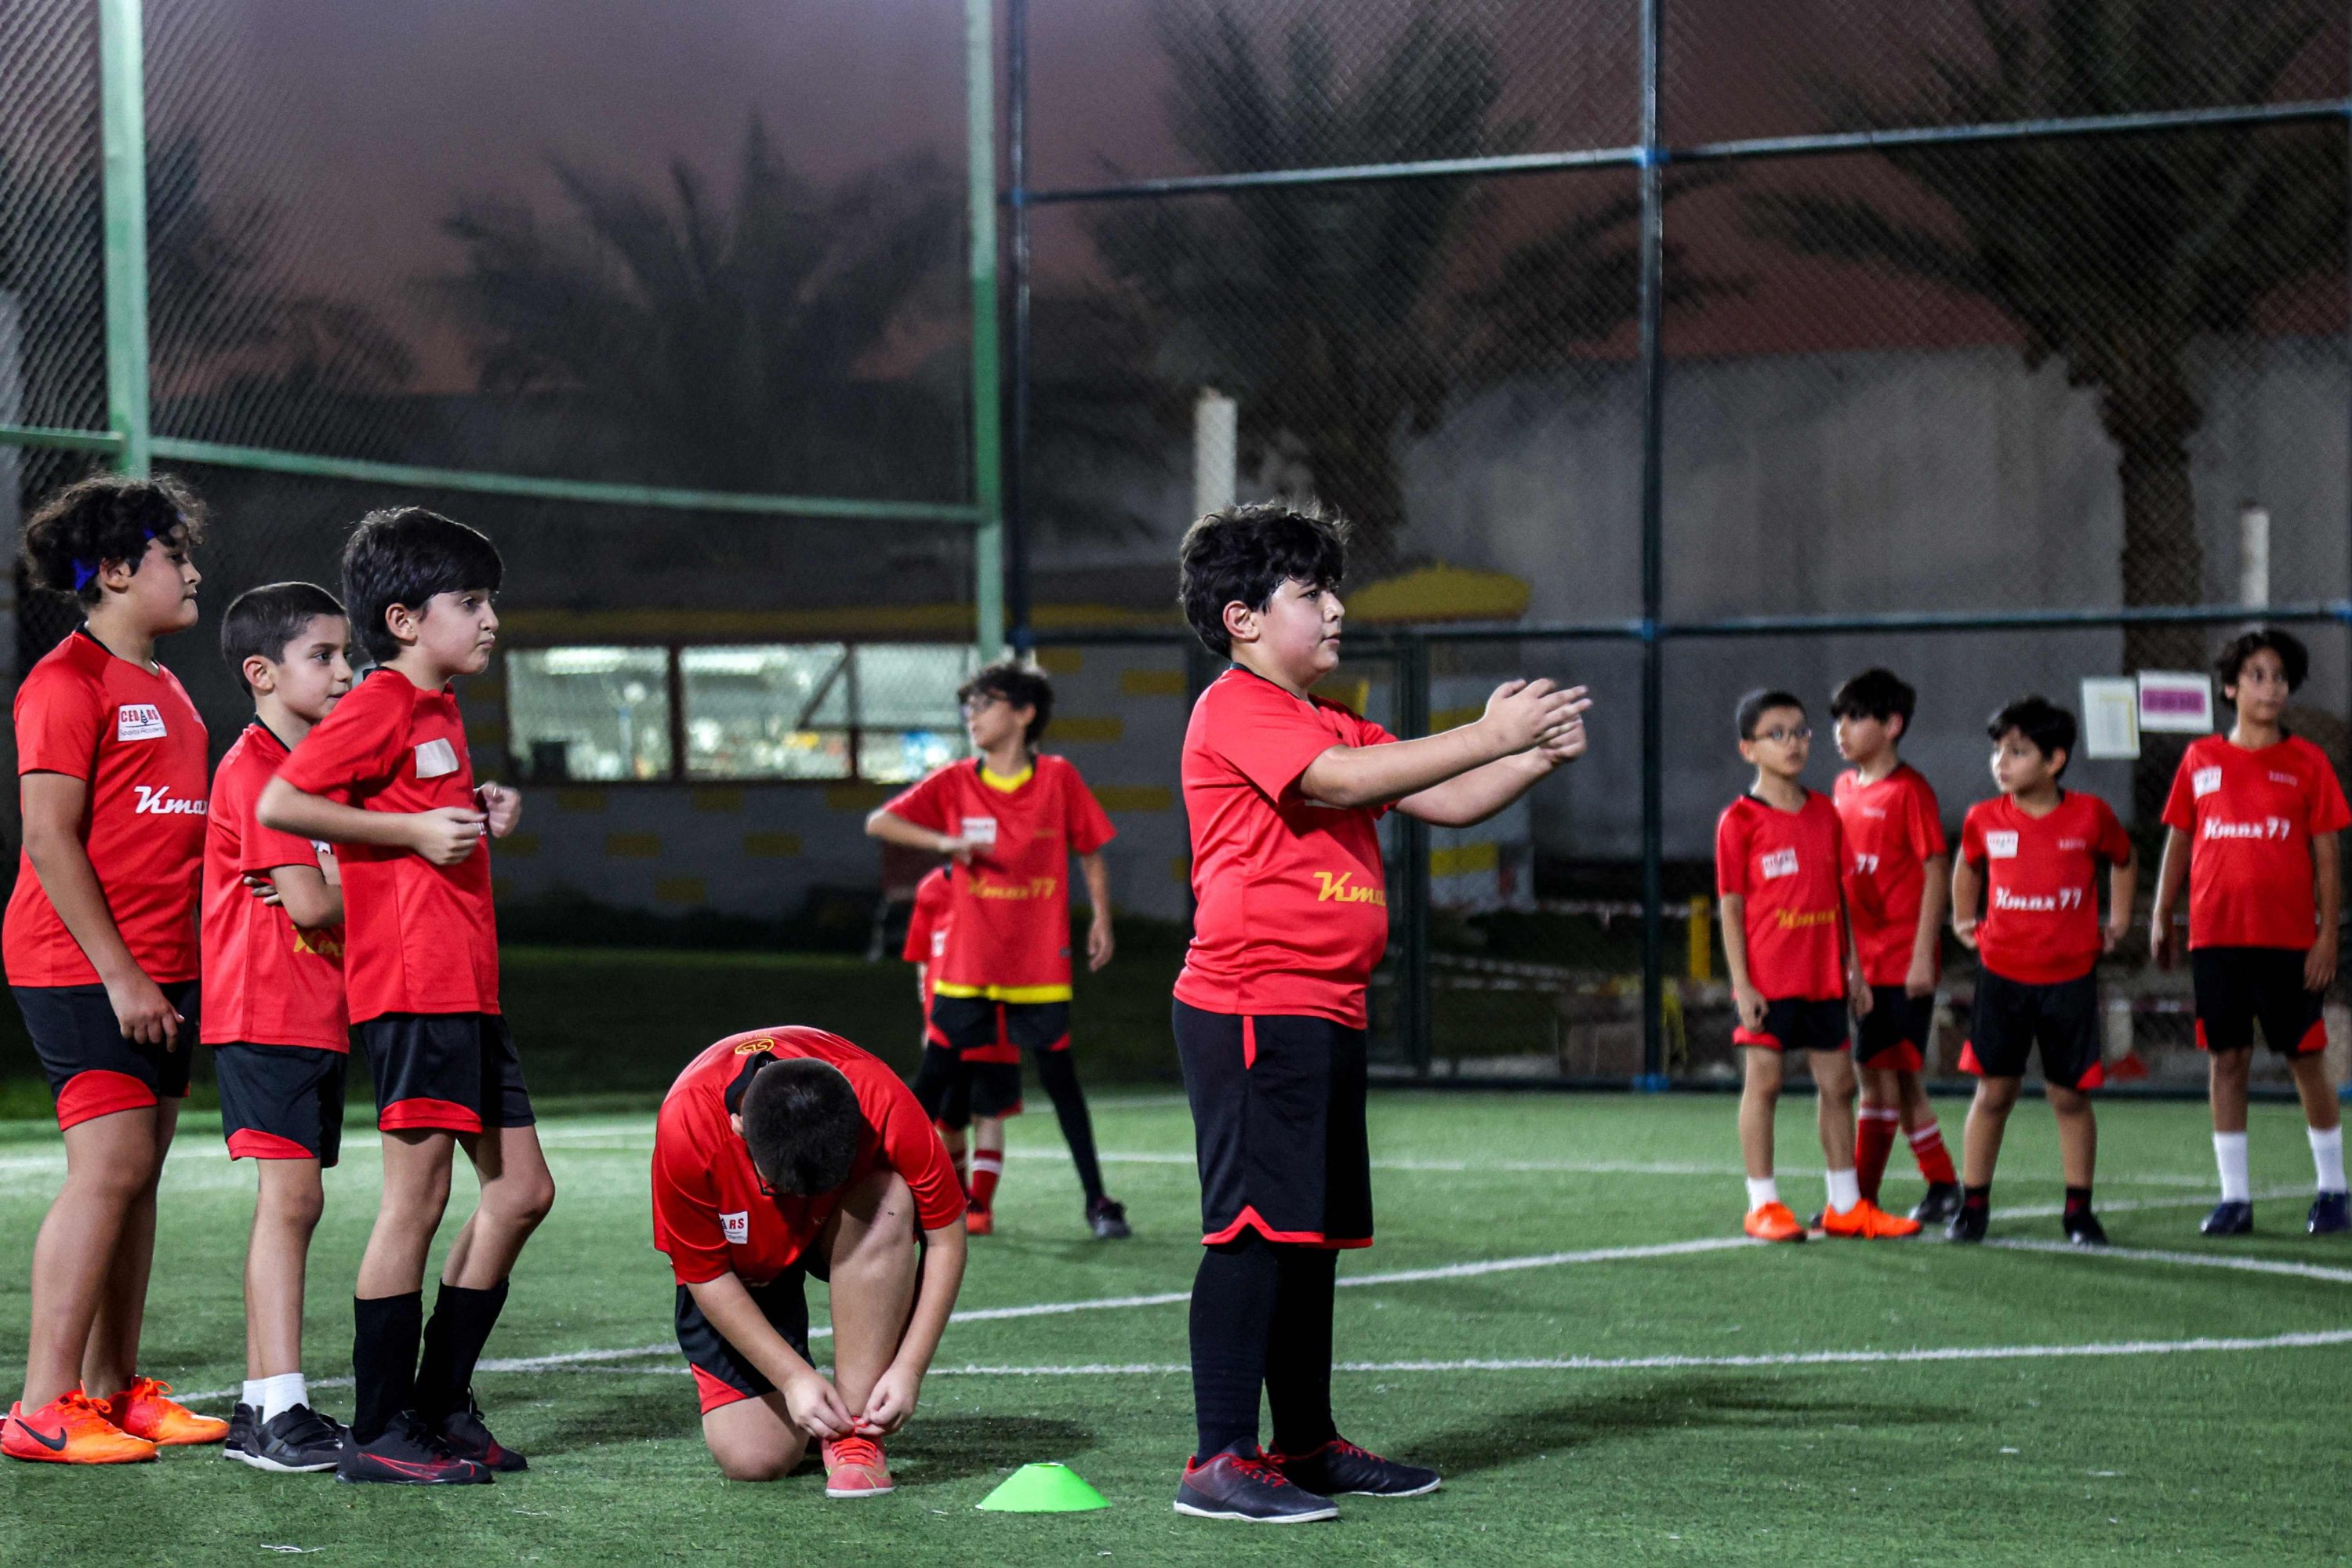 Children train on a football pitch at the Cedars Sports Academy in Qatar's capital Doha, Nov. 8, 2022. (AFP Photo)